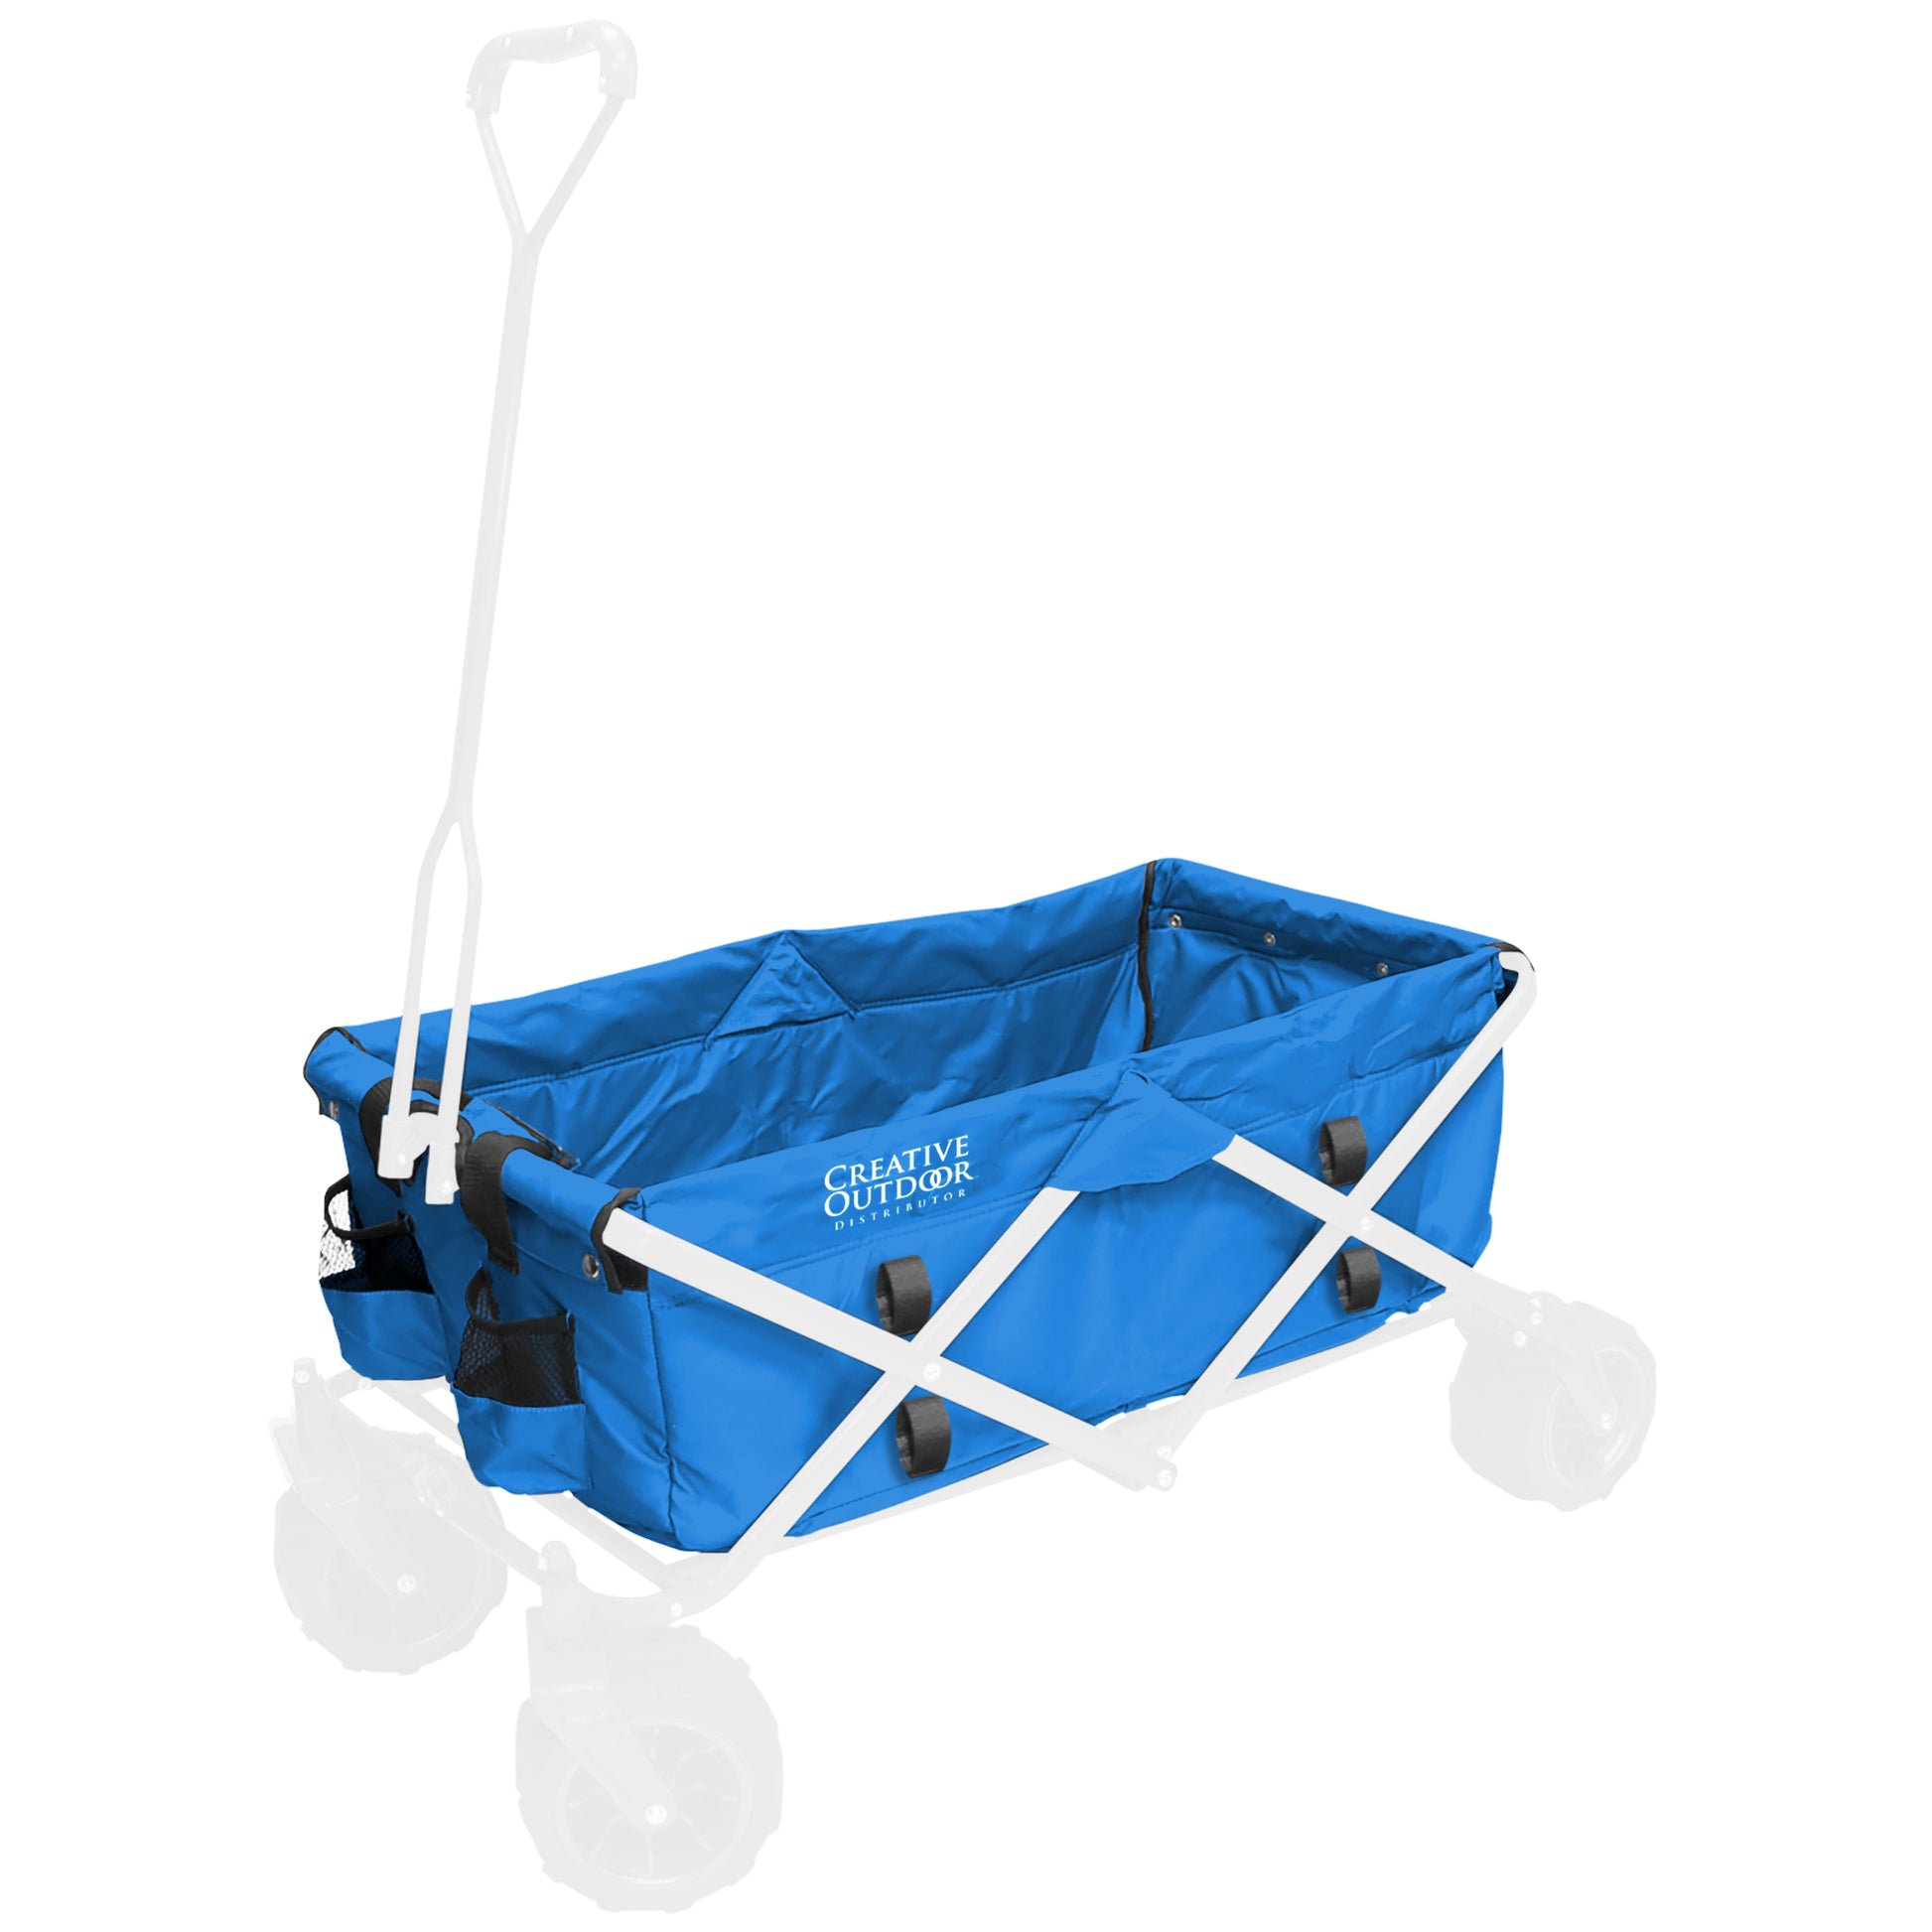 All-Terrain Folding Wagon Replacement Fabric - BLUE